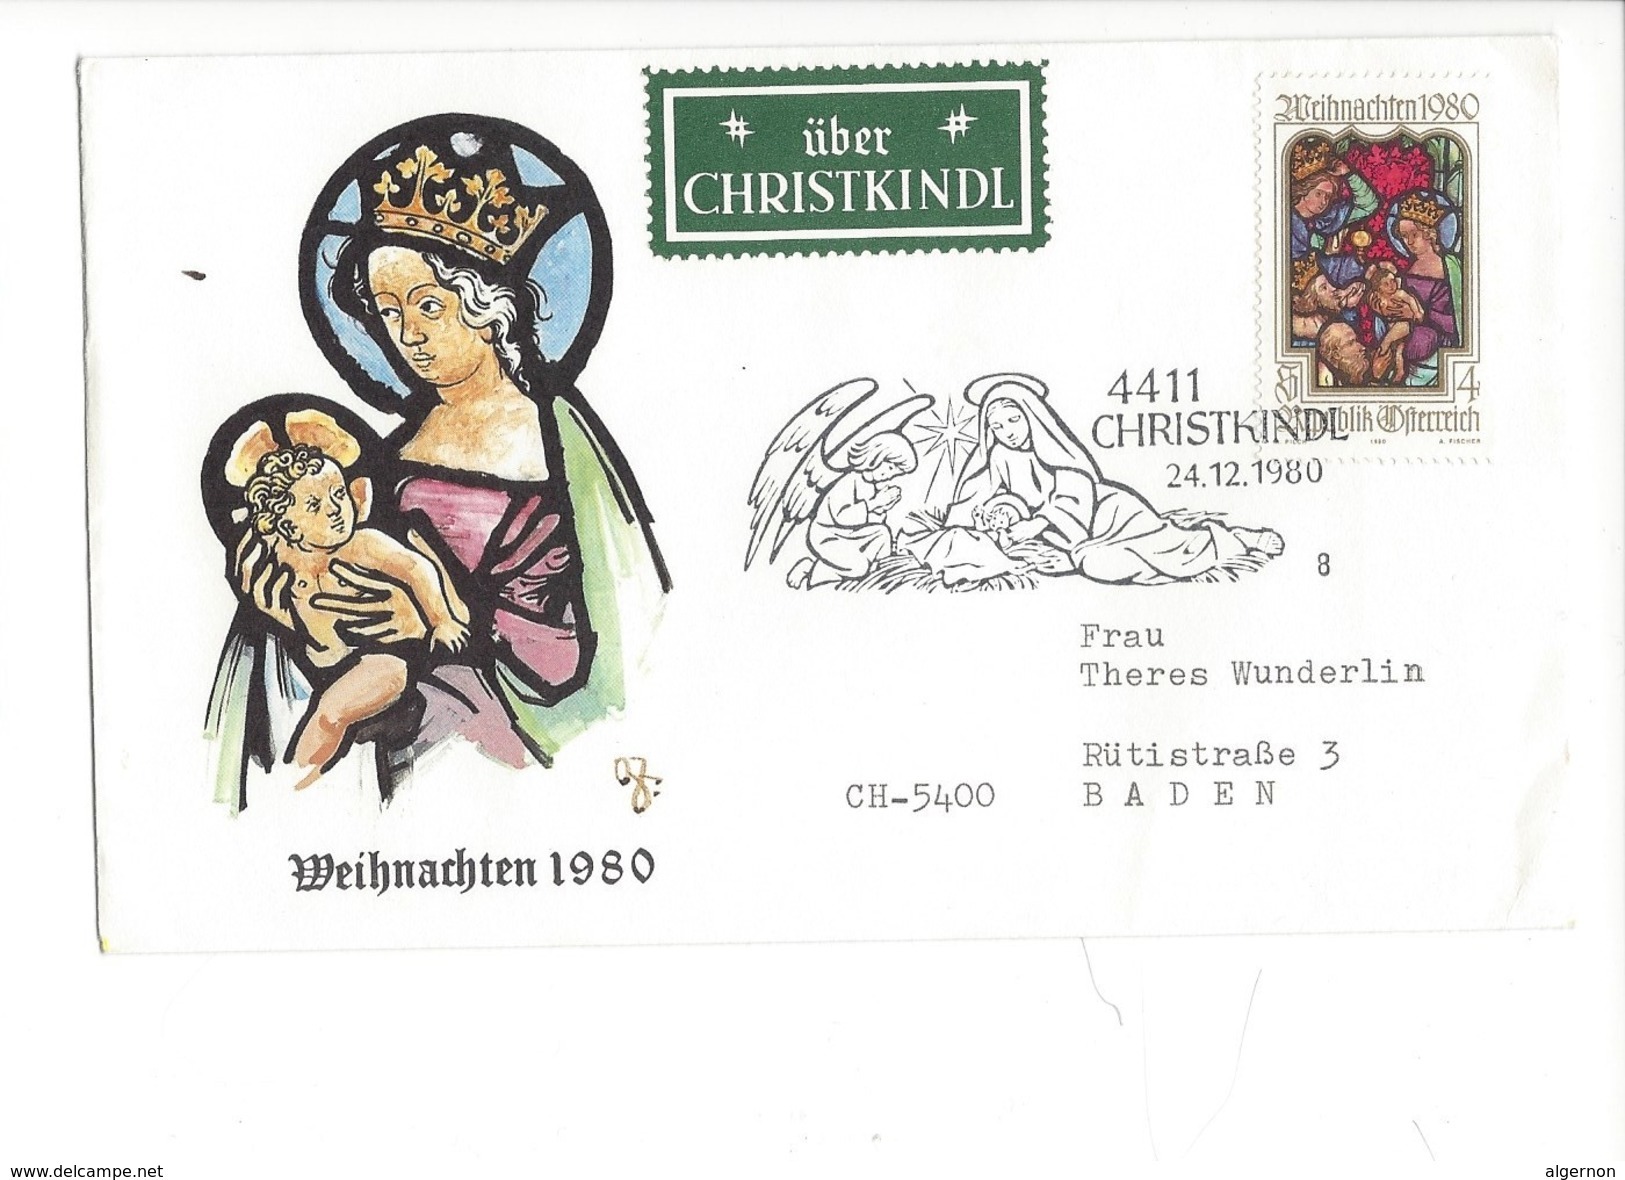 16040 - Christkindl Cover 24.12.1980 Pour Baden CH Weihnachten 1980 + über Christkindl - Noël